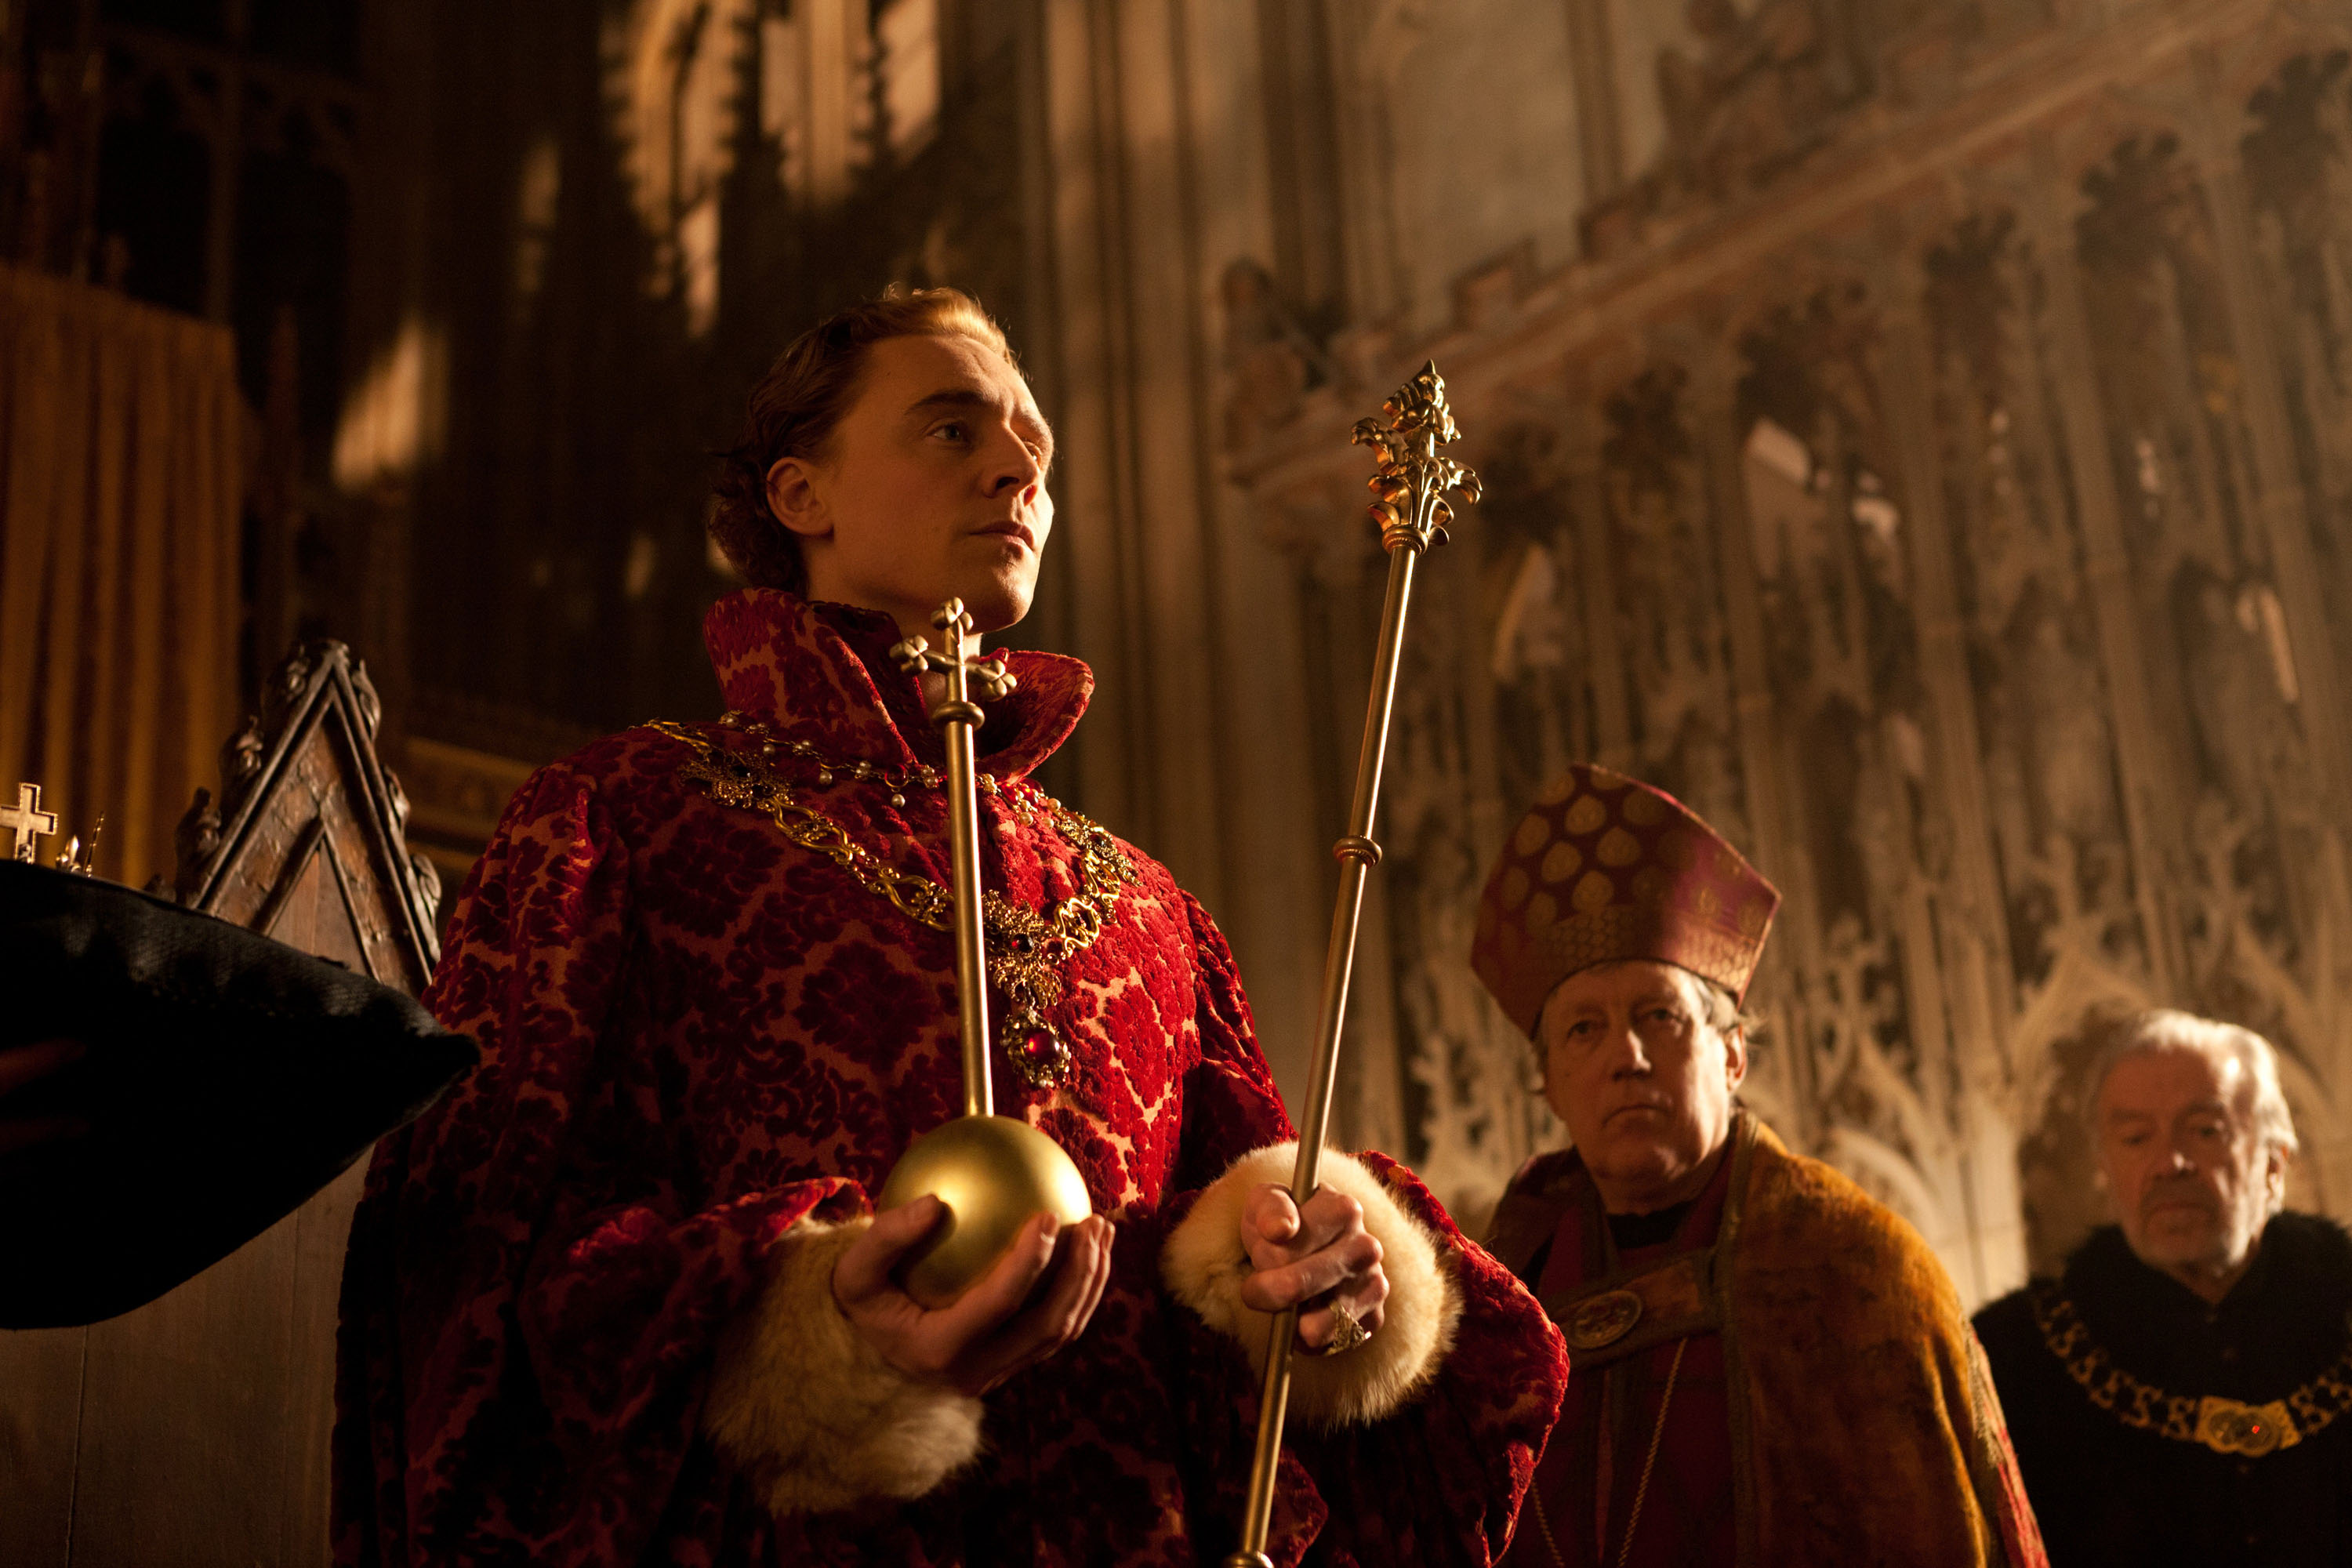 Henry IV part 2 (2012) - William Shakespeare - Gallery - Fragile Memoirs